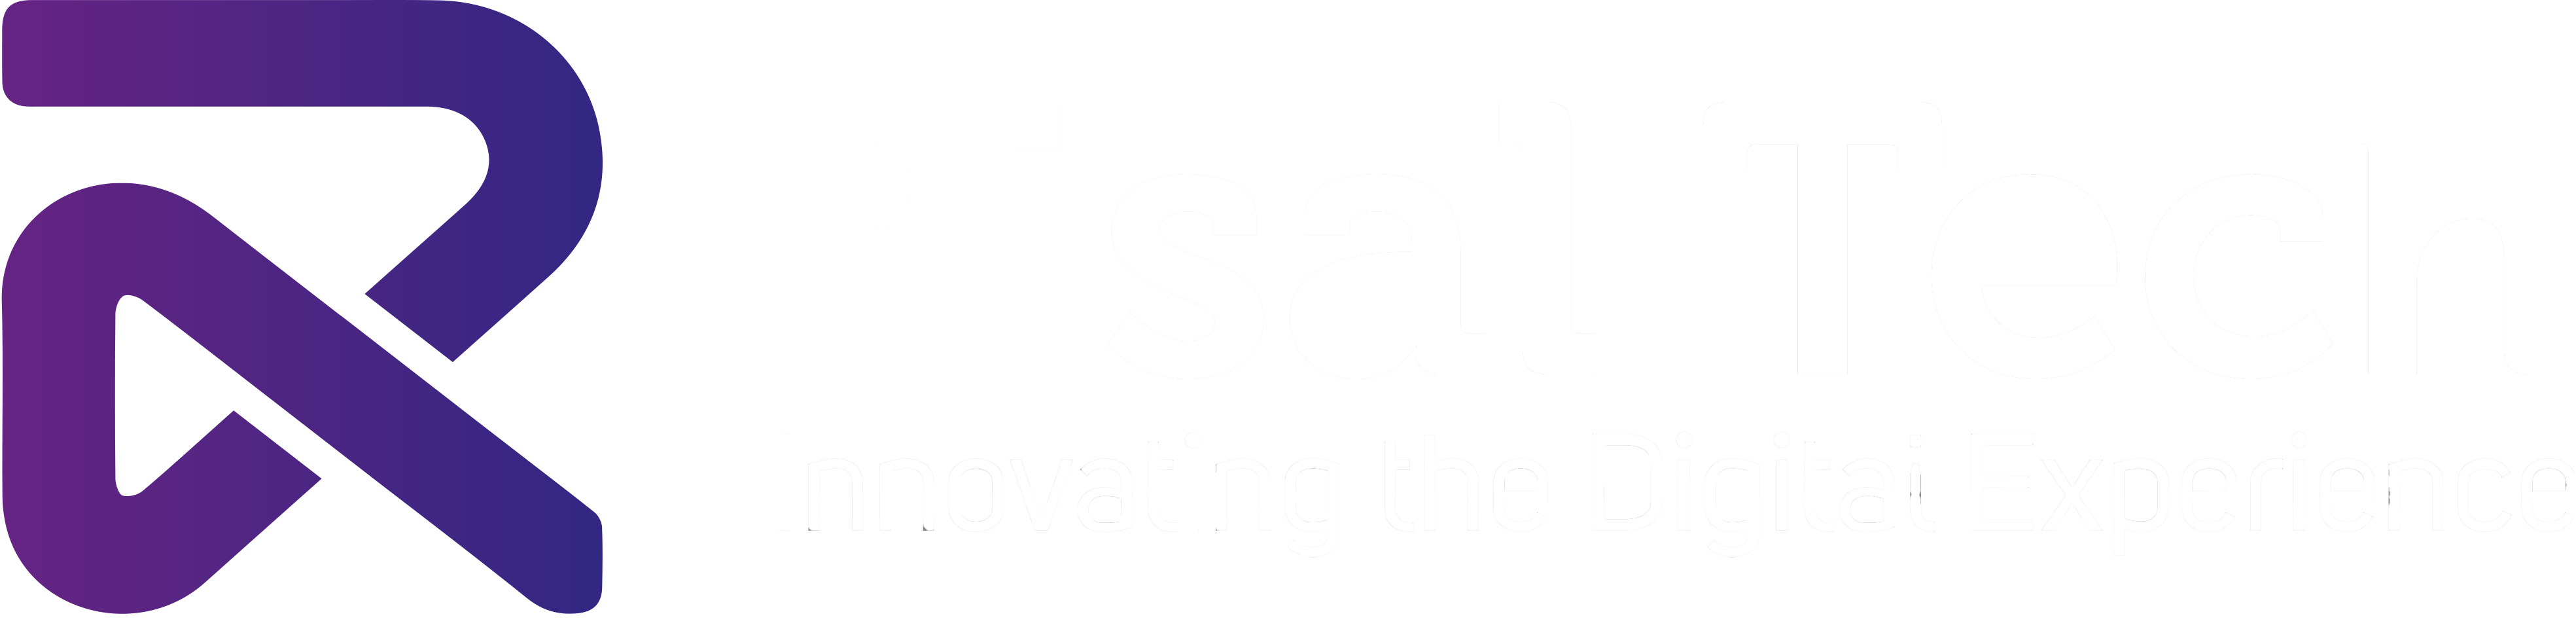 Risal Technologies Footer Logo Image